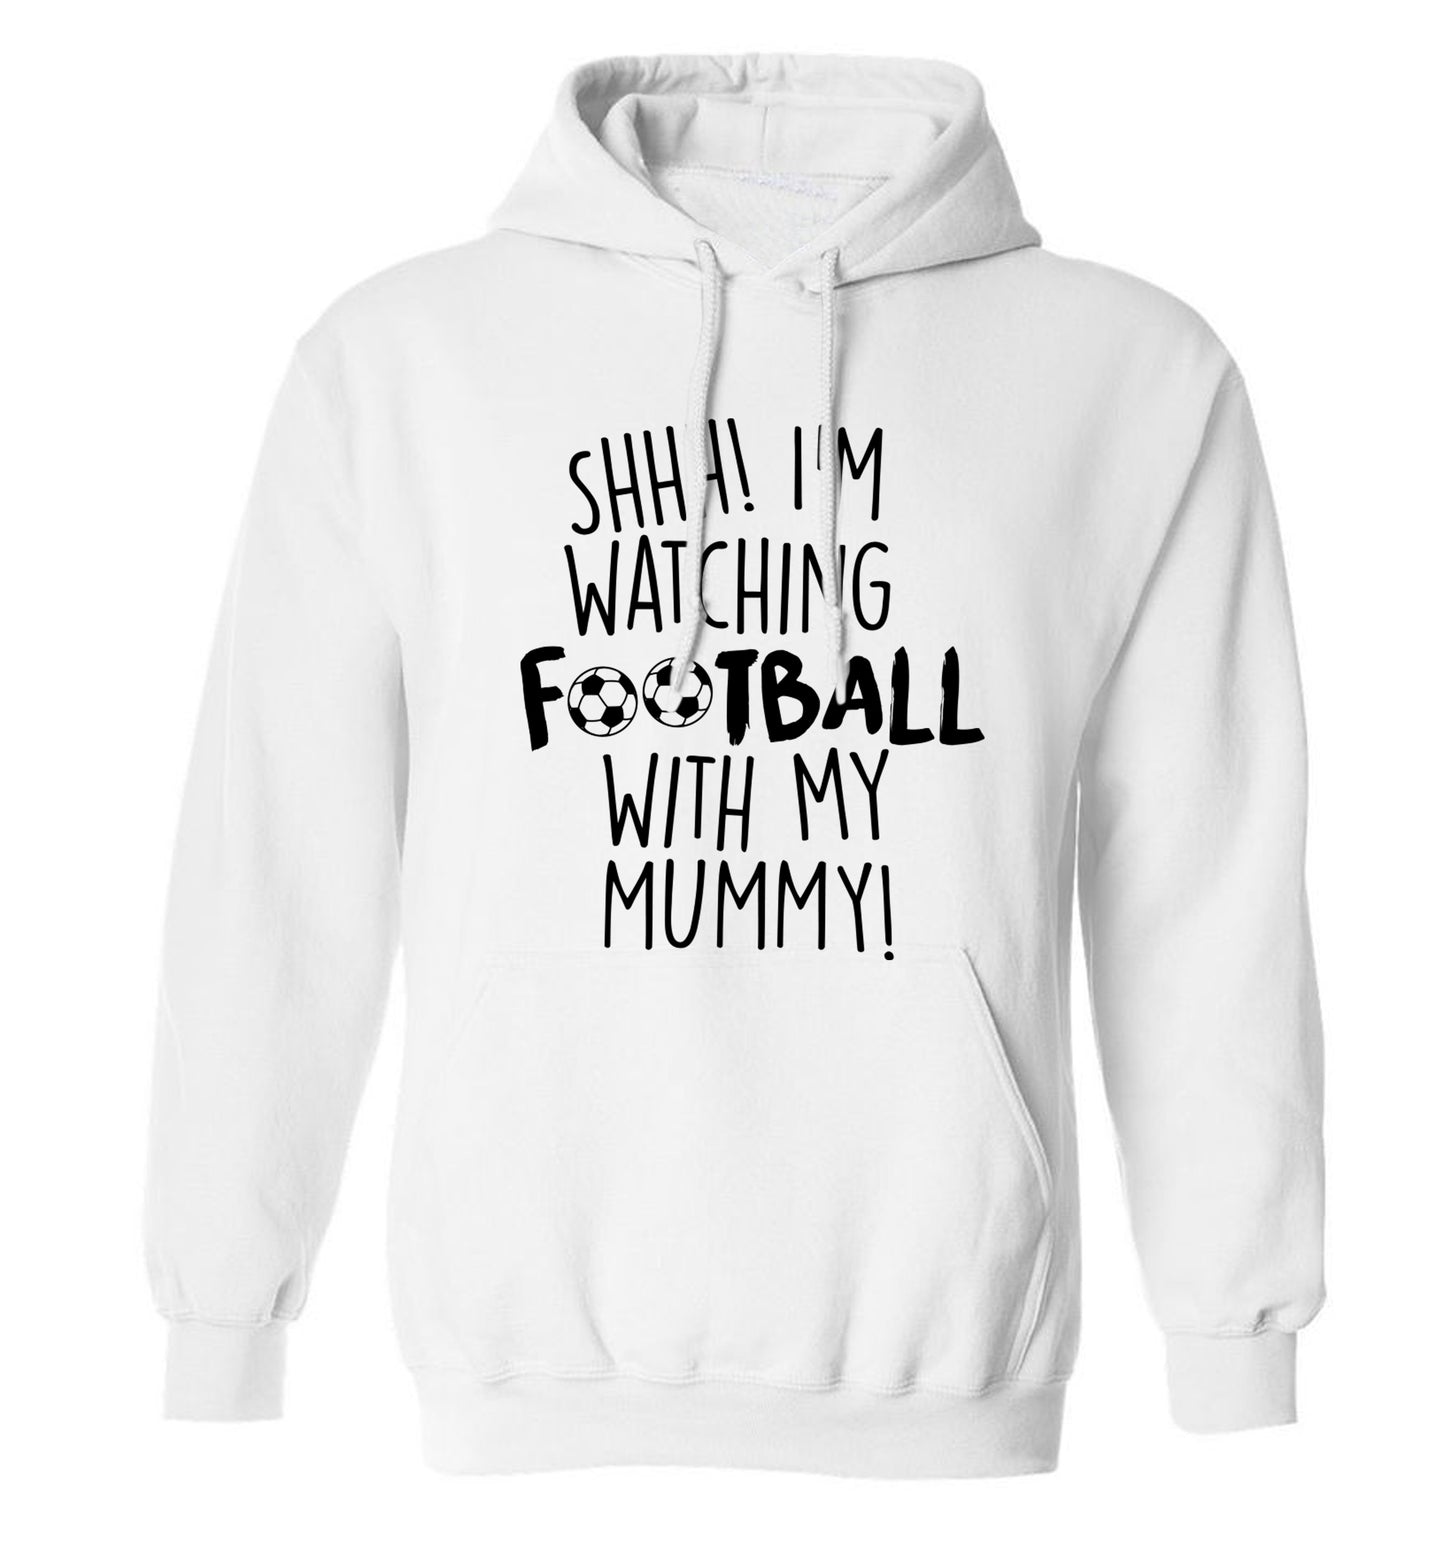 Shhh I'm watching football with my mummy adults unisexwhite hoodie 2XL